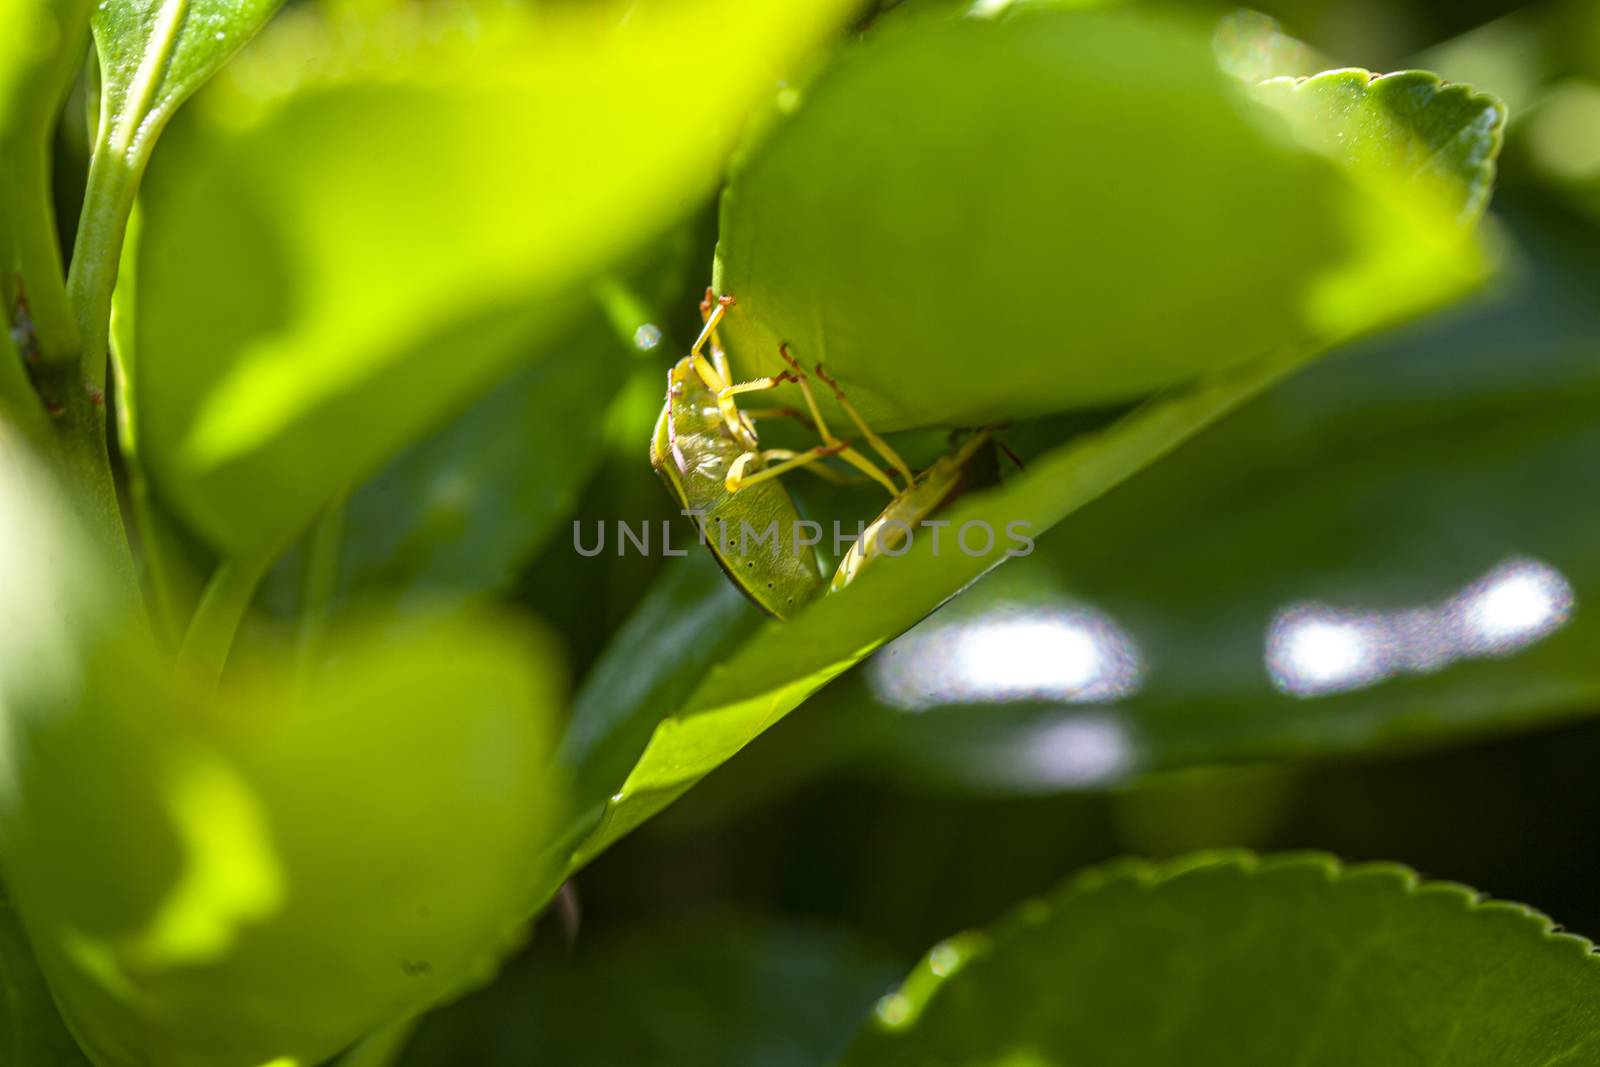 Bedbug on leves in spring, Image taken with macro lens